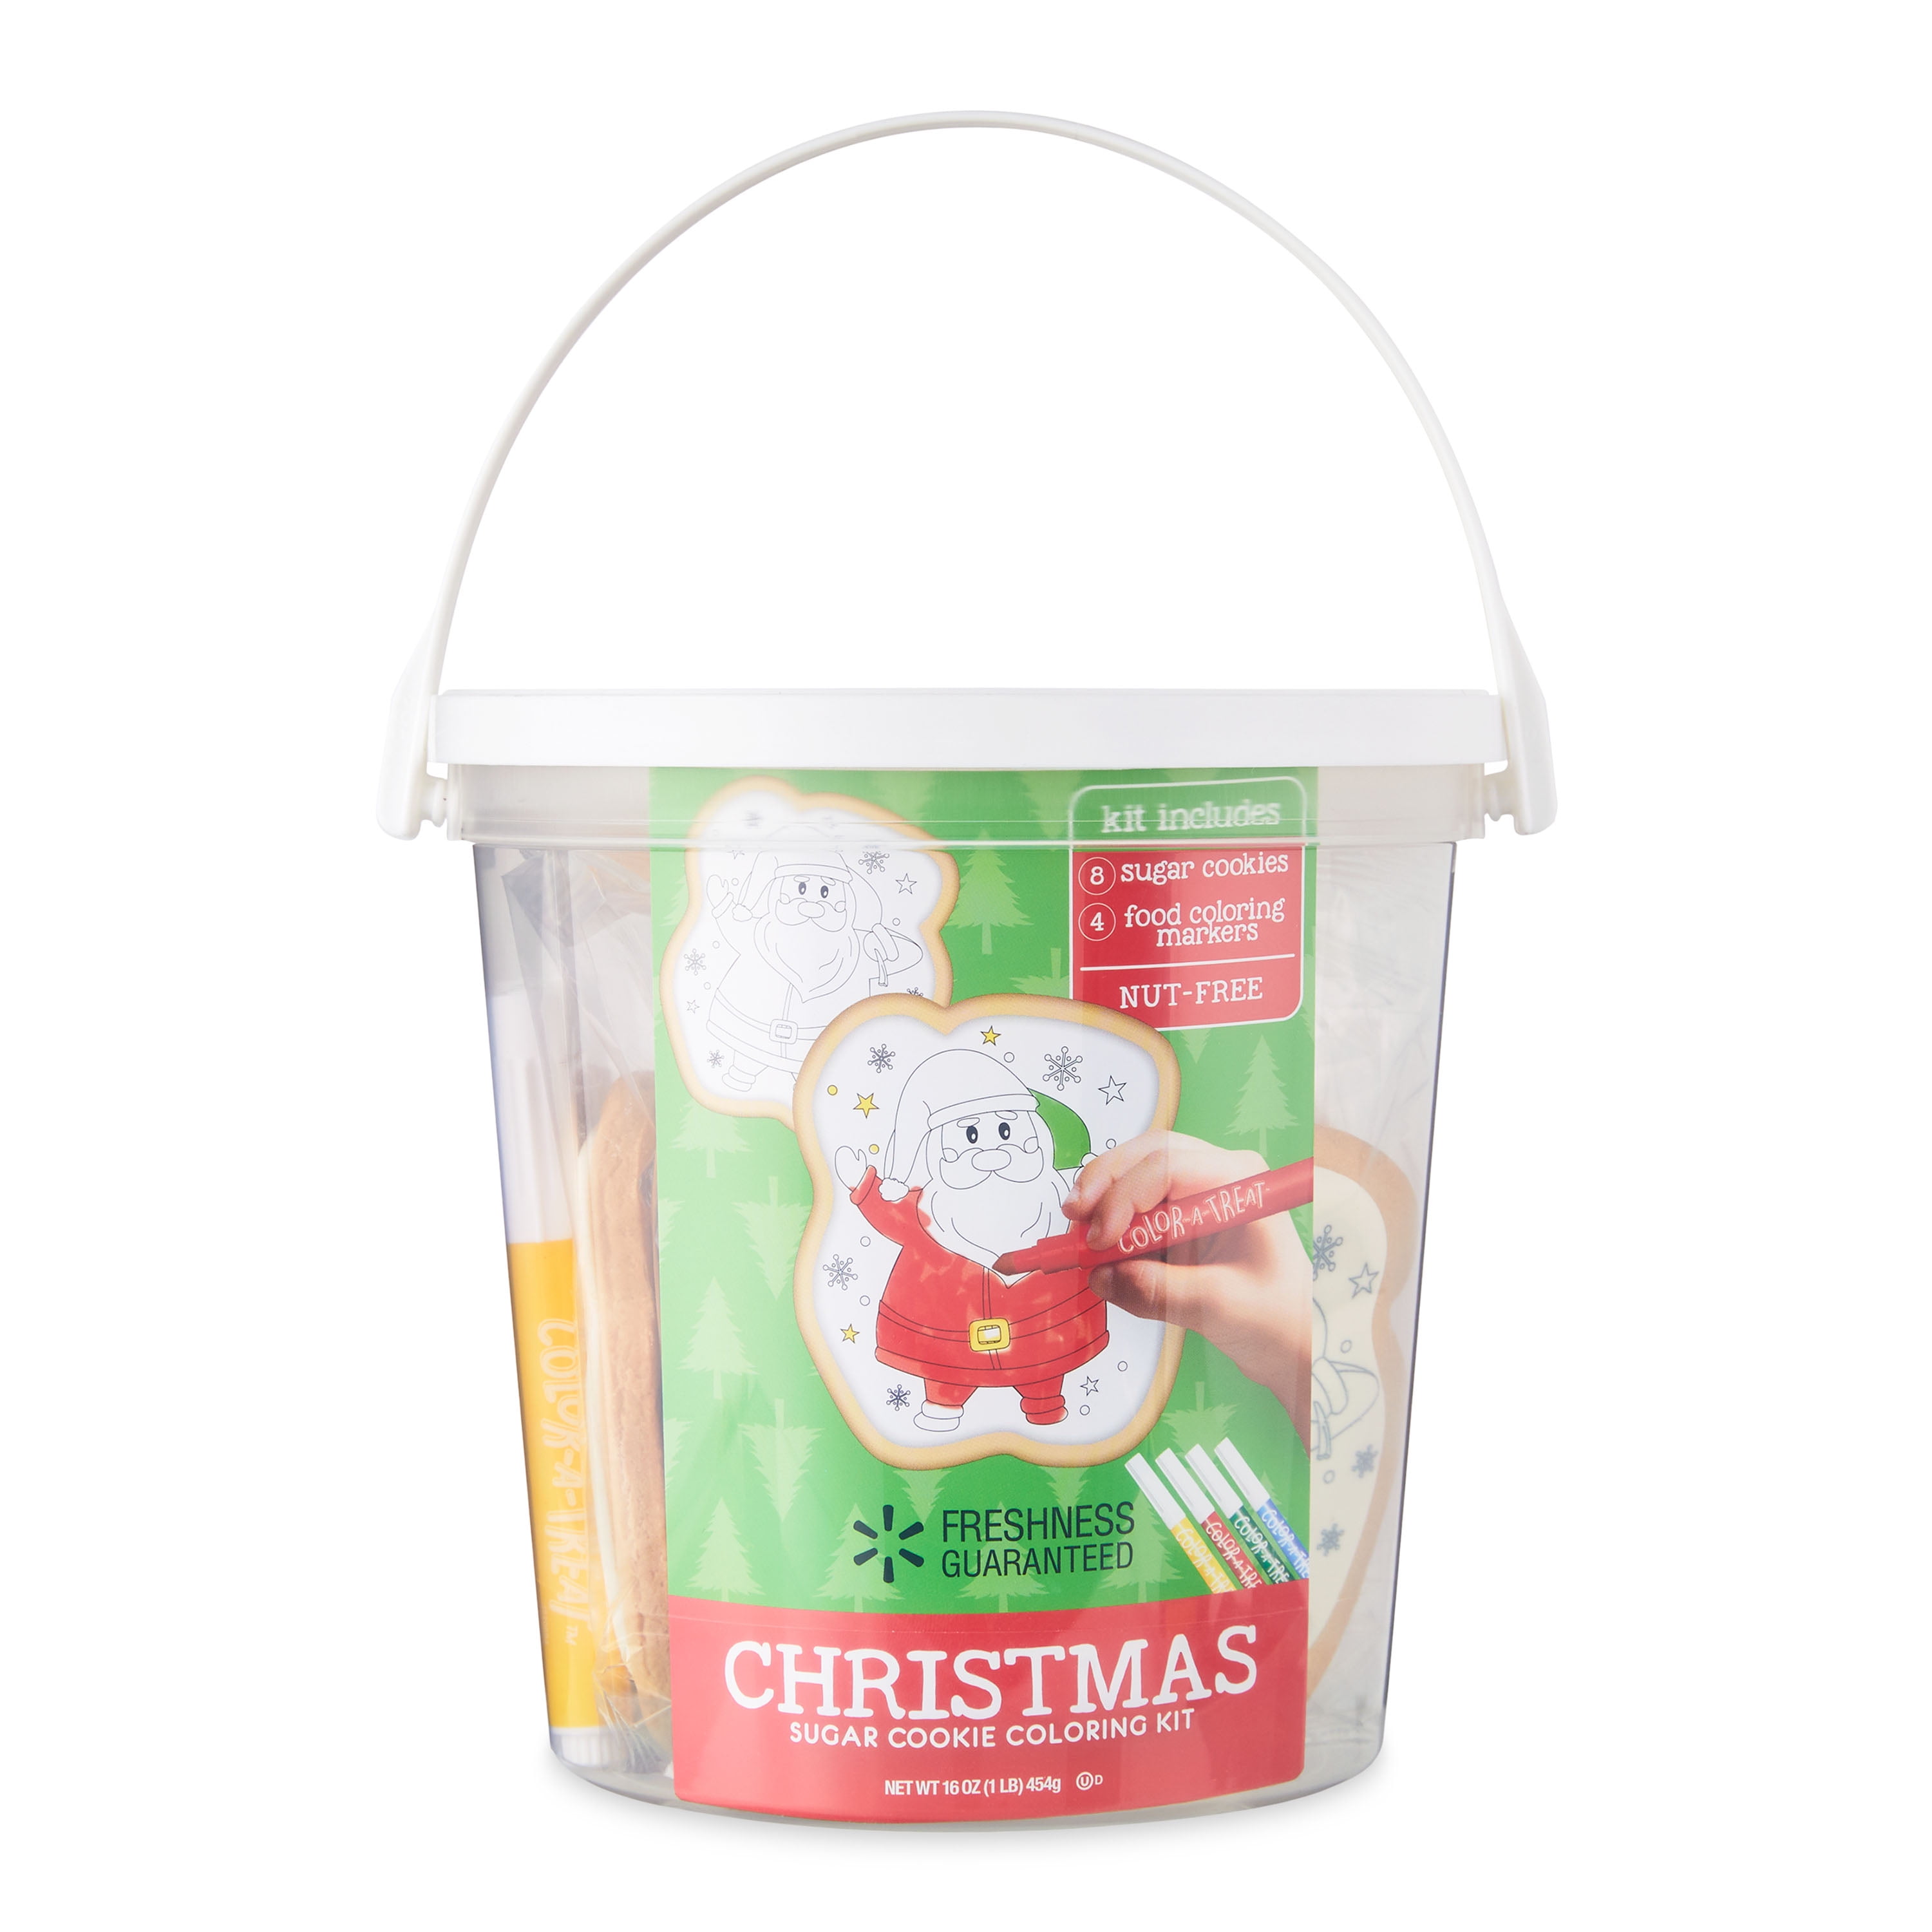 Freshness Guaranteed Christmas Sugar Cookie Coloring Kit, 16 oz